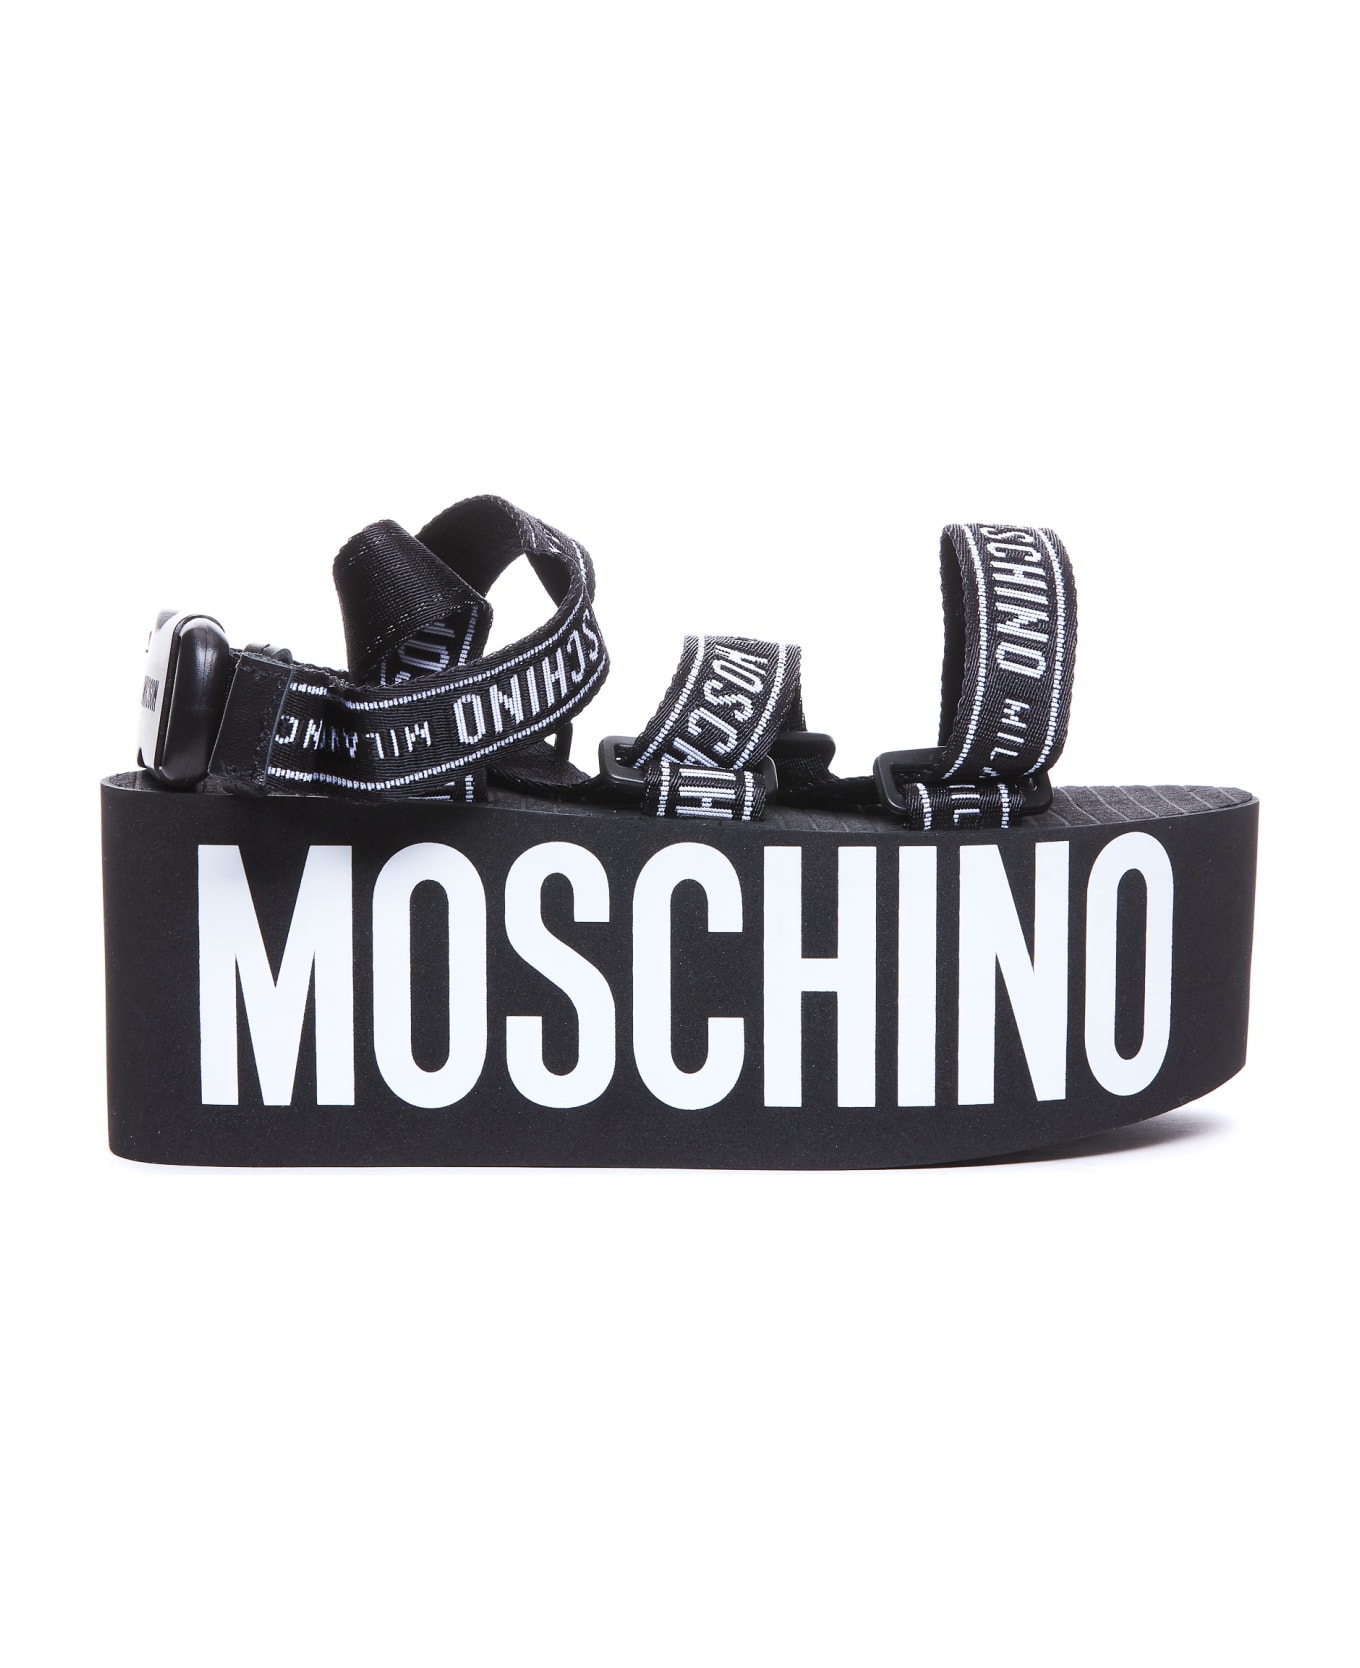 Moschino Logo Tape Wedge Sandals - Black